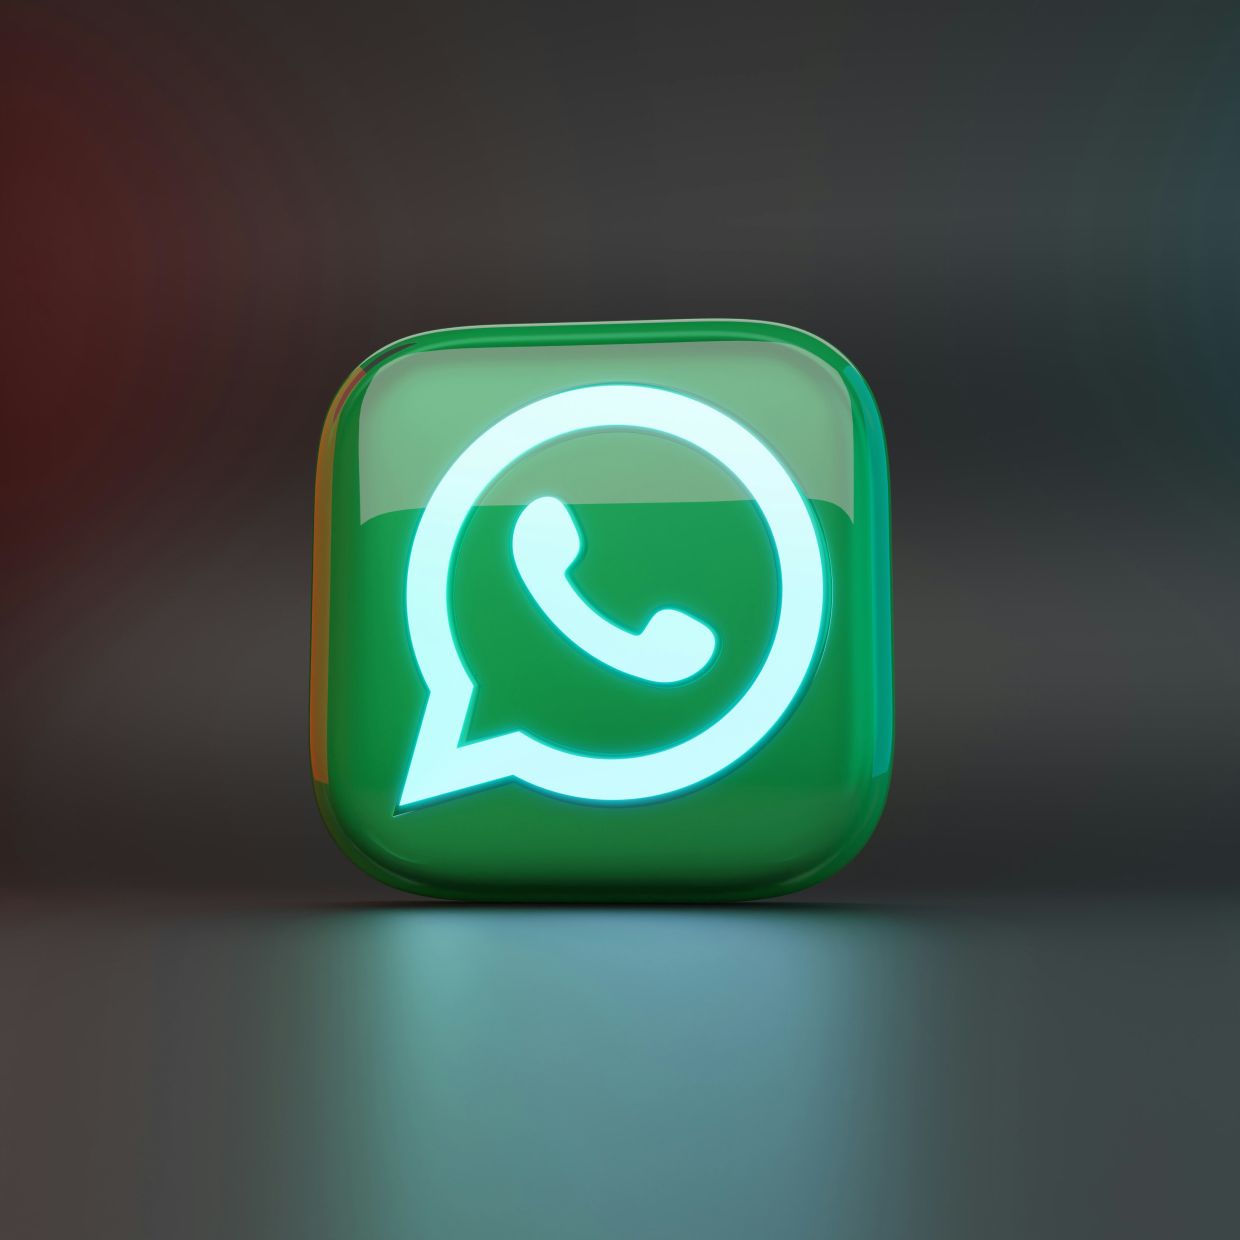 Meta under fire for ‘tone deaf’ minimum age change on WhatsApp